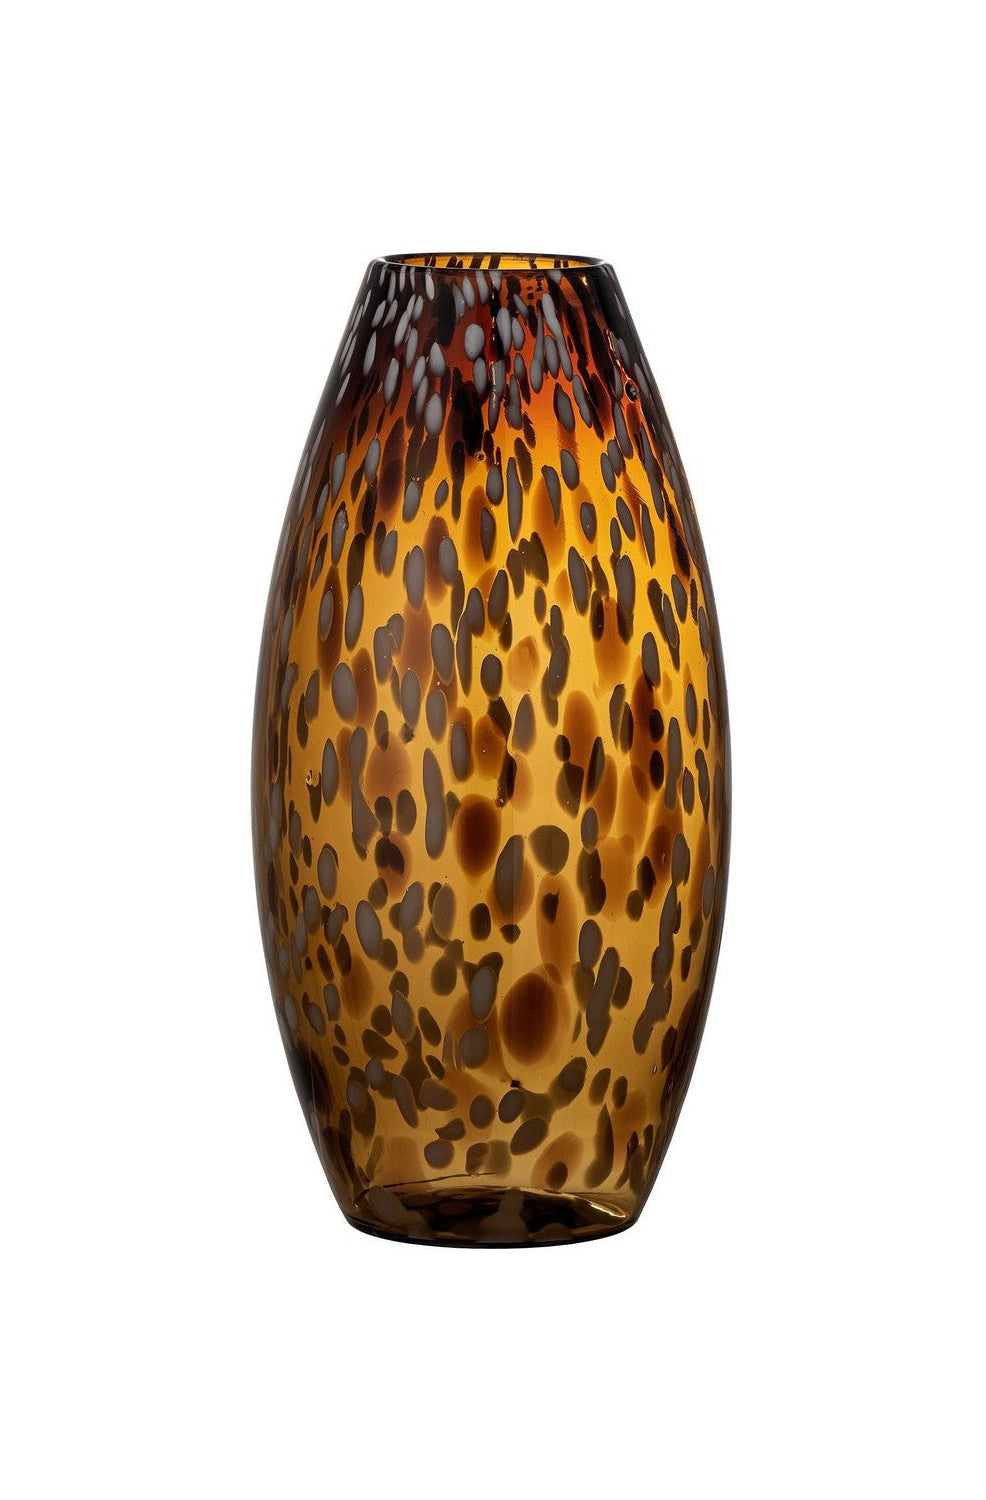 Bloomingville Daraz Vase, Brown, Glass